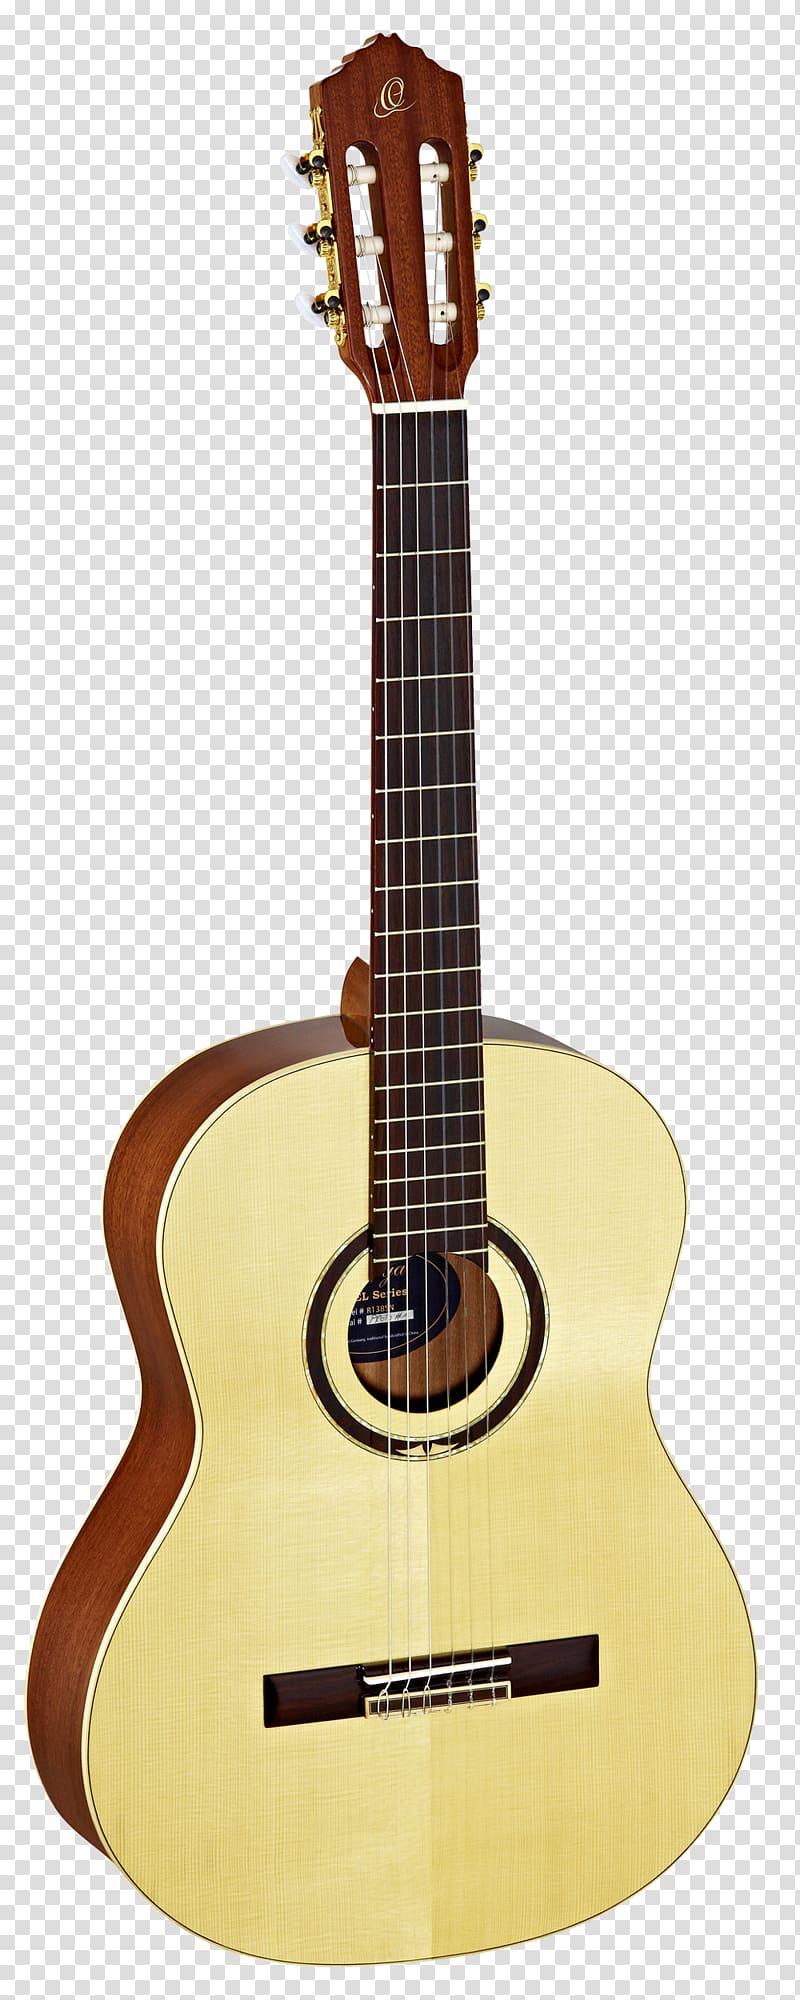 Twelve-string guitar Ukulele Classical guitar Musical Instruments, amancio ortega transparent background PNG clipart